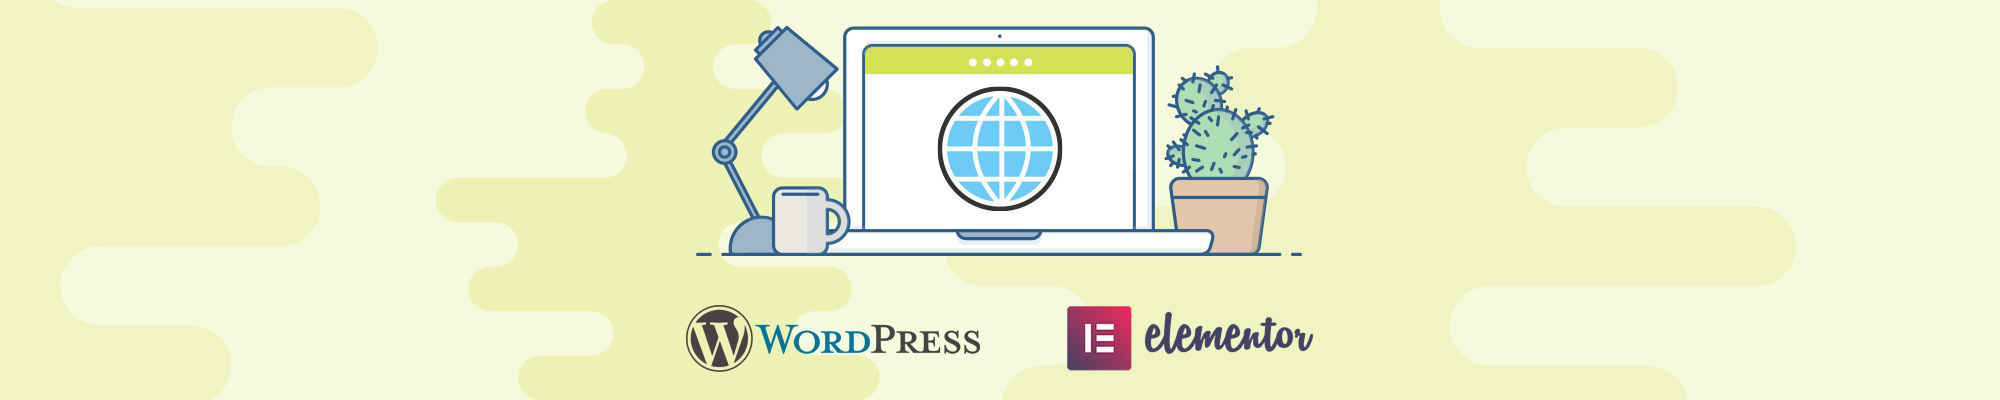 WordPress Website & Themes/Templates mit Elementor Pro